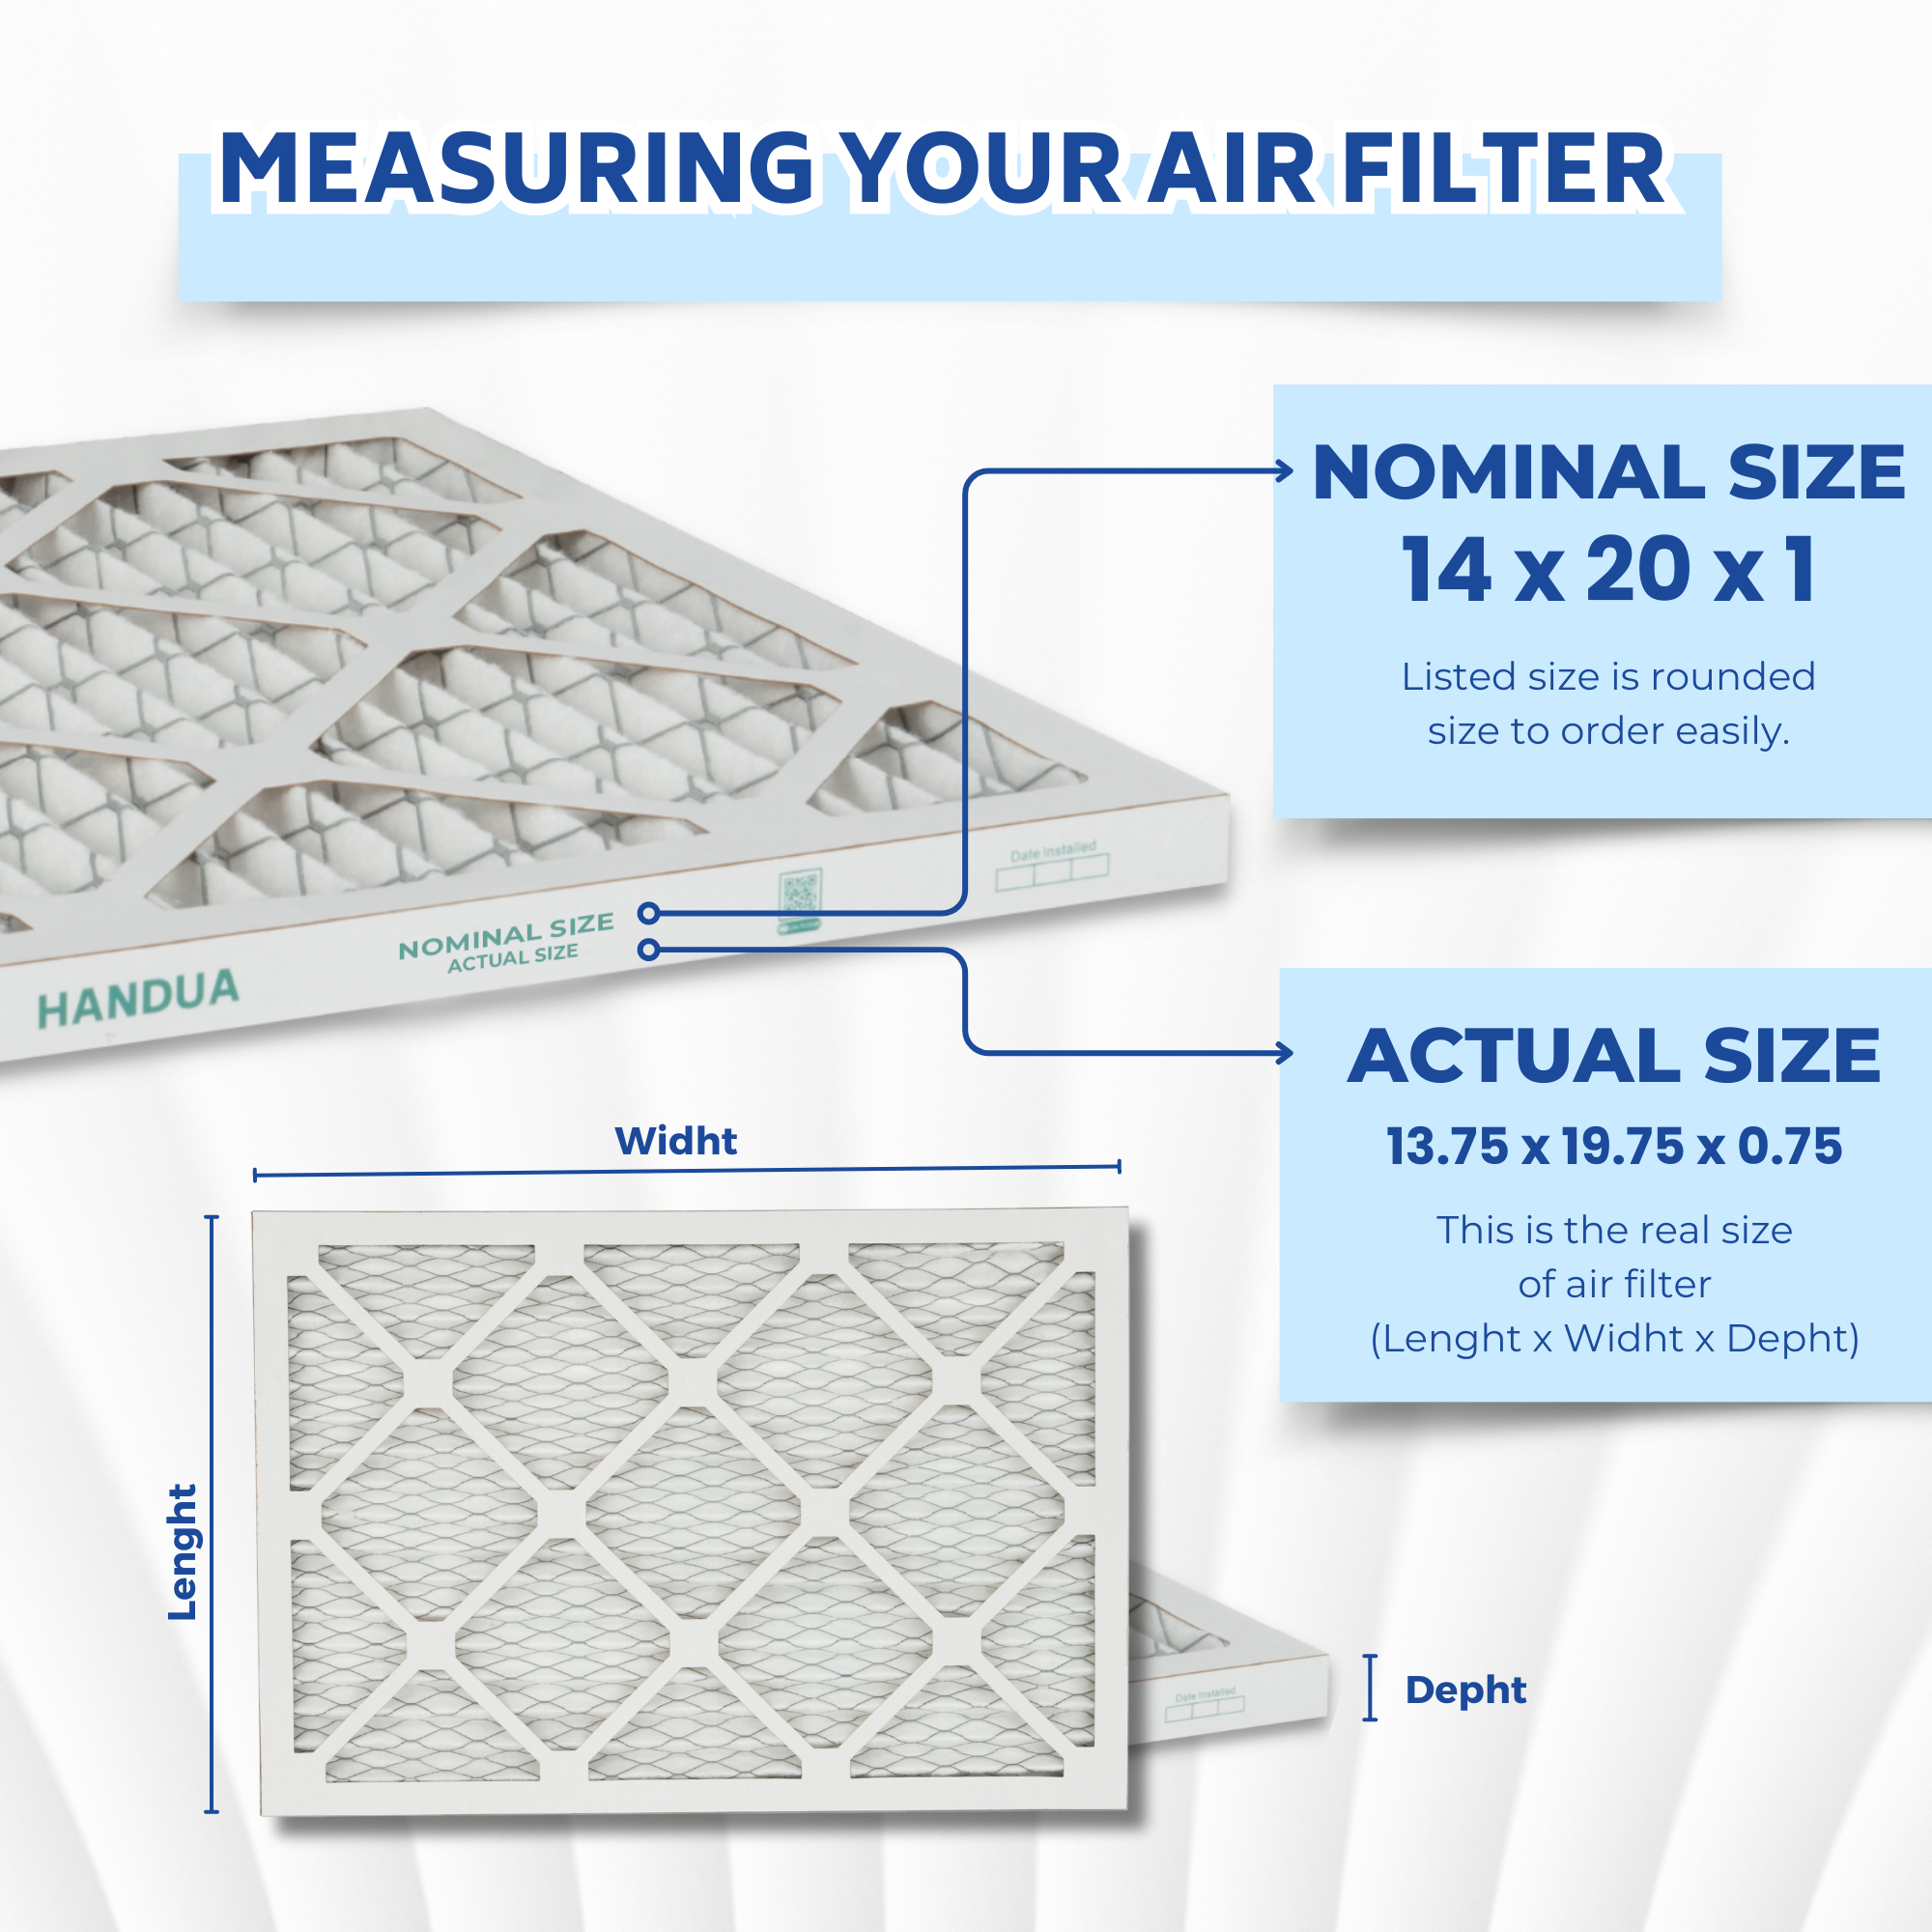 Handua 14x20x1 Air Filter MERV 13 Optimal Control, Plated Furnace AC Air Replacement Filter, 4 Pack (Actual Size: 13.75" x 19.75" x 0.75")